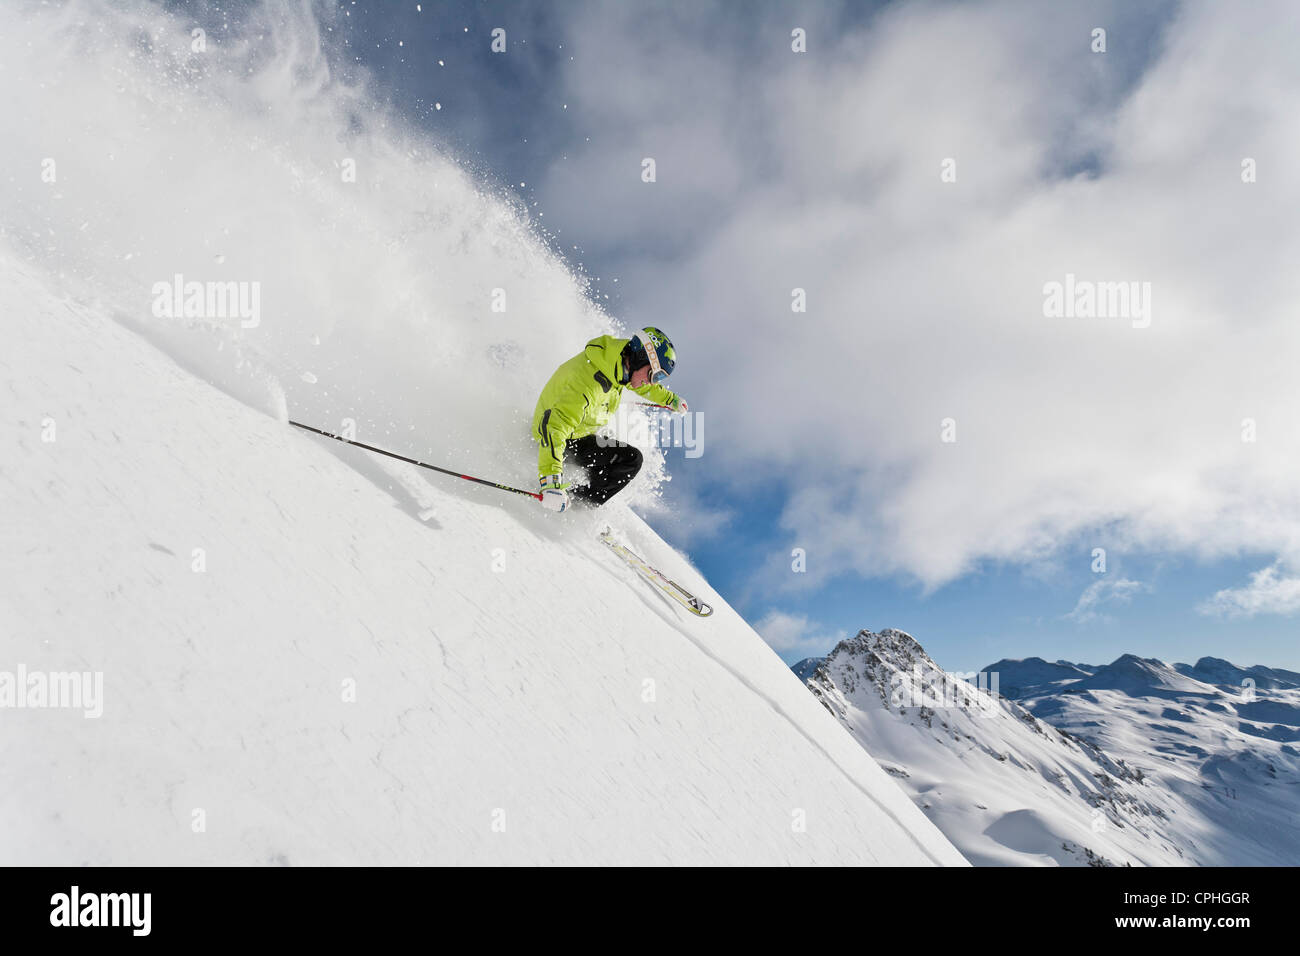 Carving, skiing, Extreme, man, ski, winter sports, fun sport, winter, sky,  runway, man, dynamic, Obertauern, Salzburg, Austria Stock Photo - Alamy